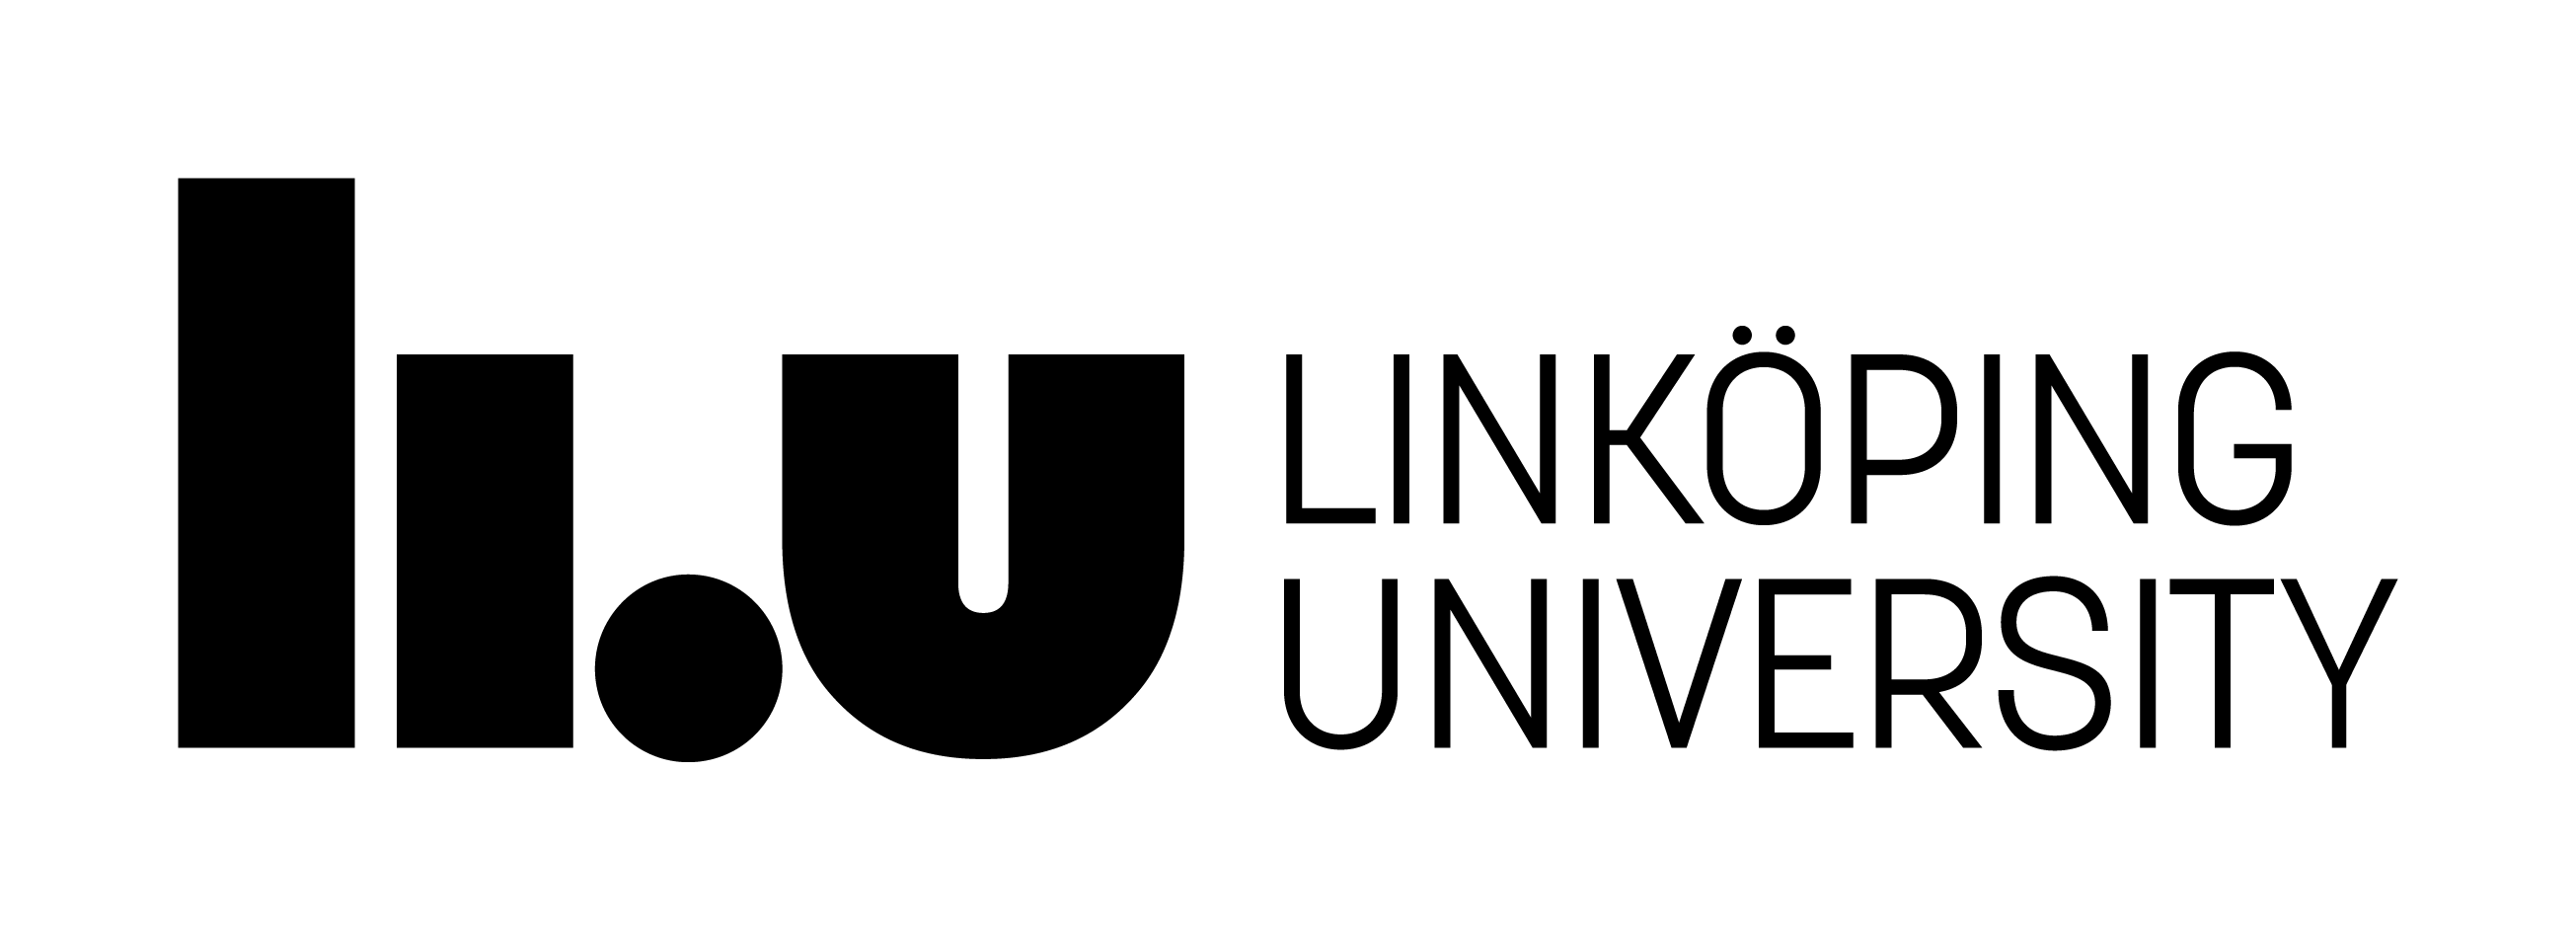 Liu Logo - Download logotype - Linköping University